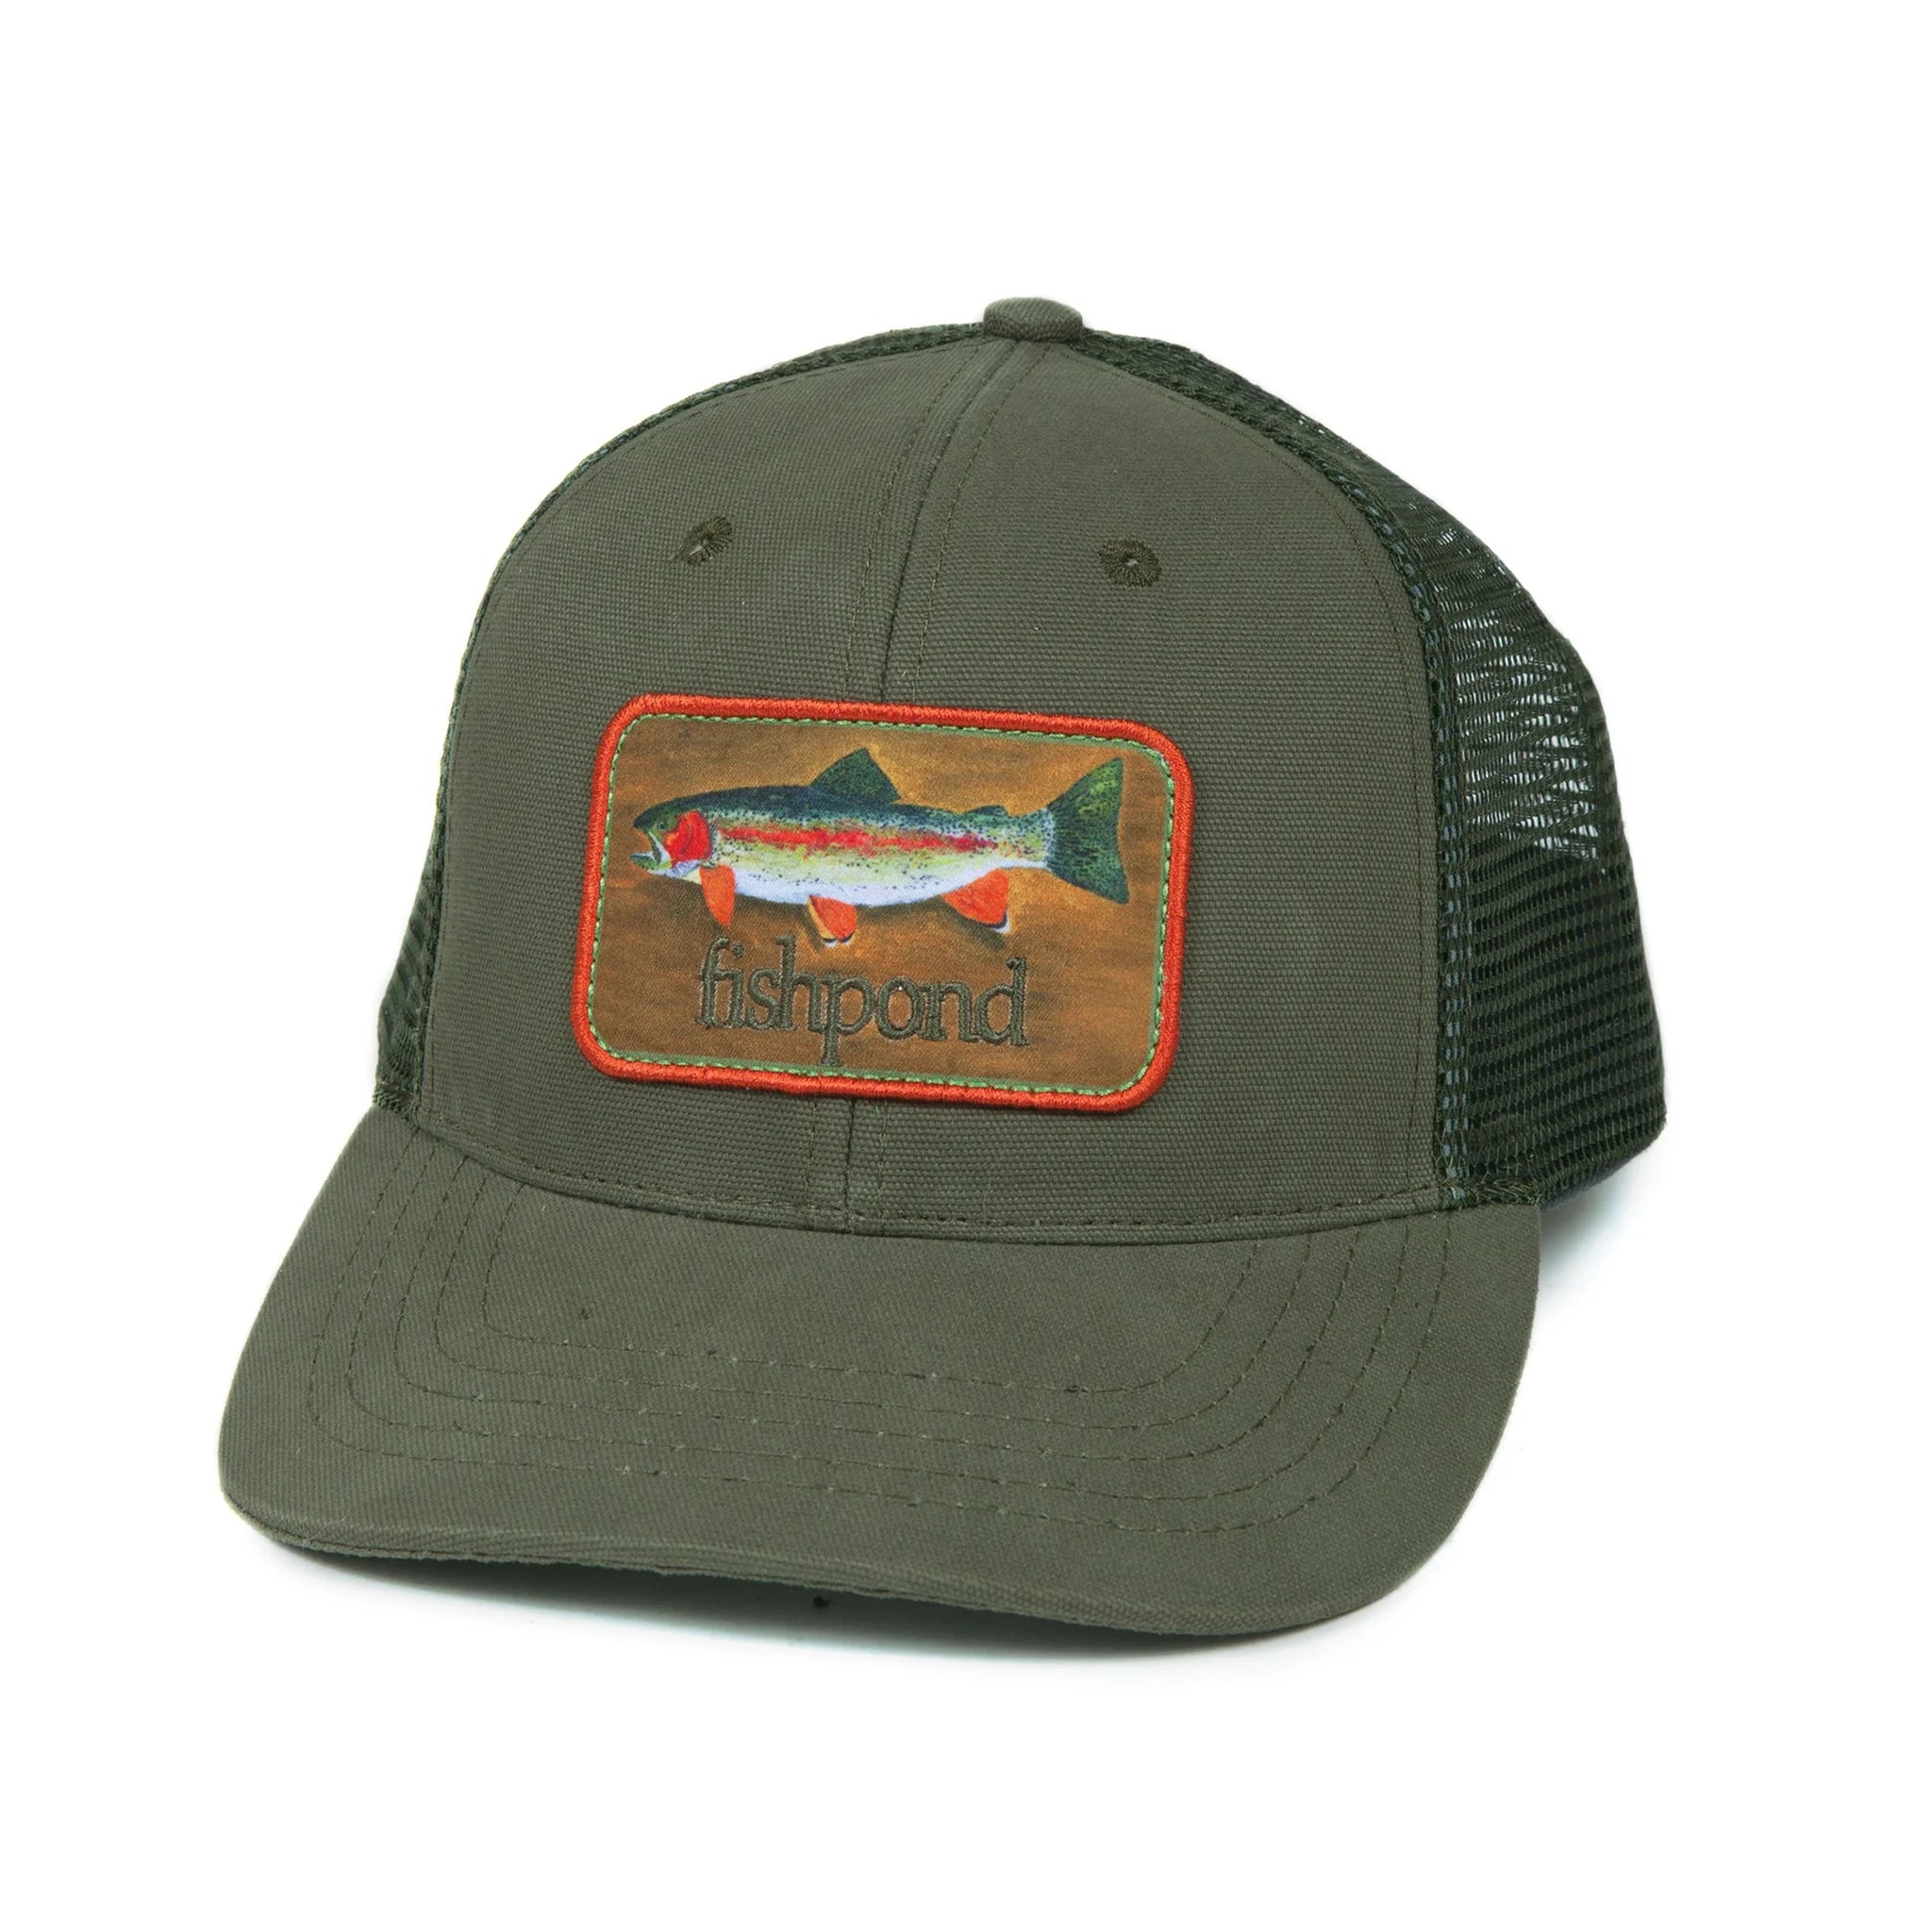 Fishpond Rainbow Hat